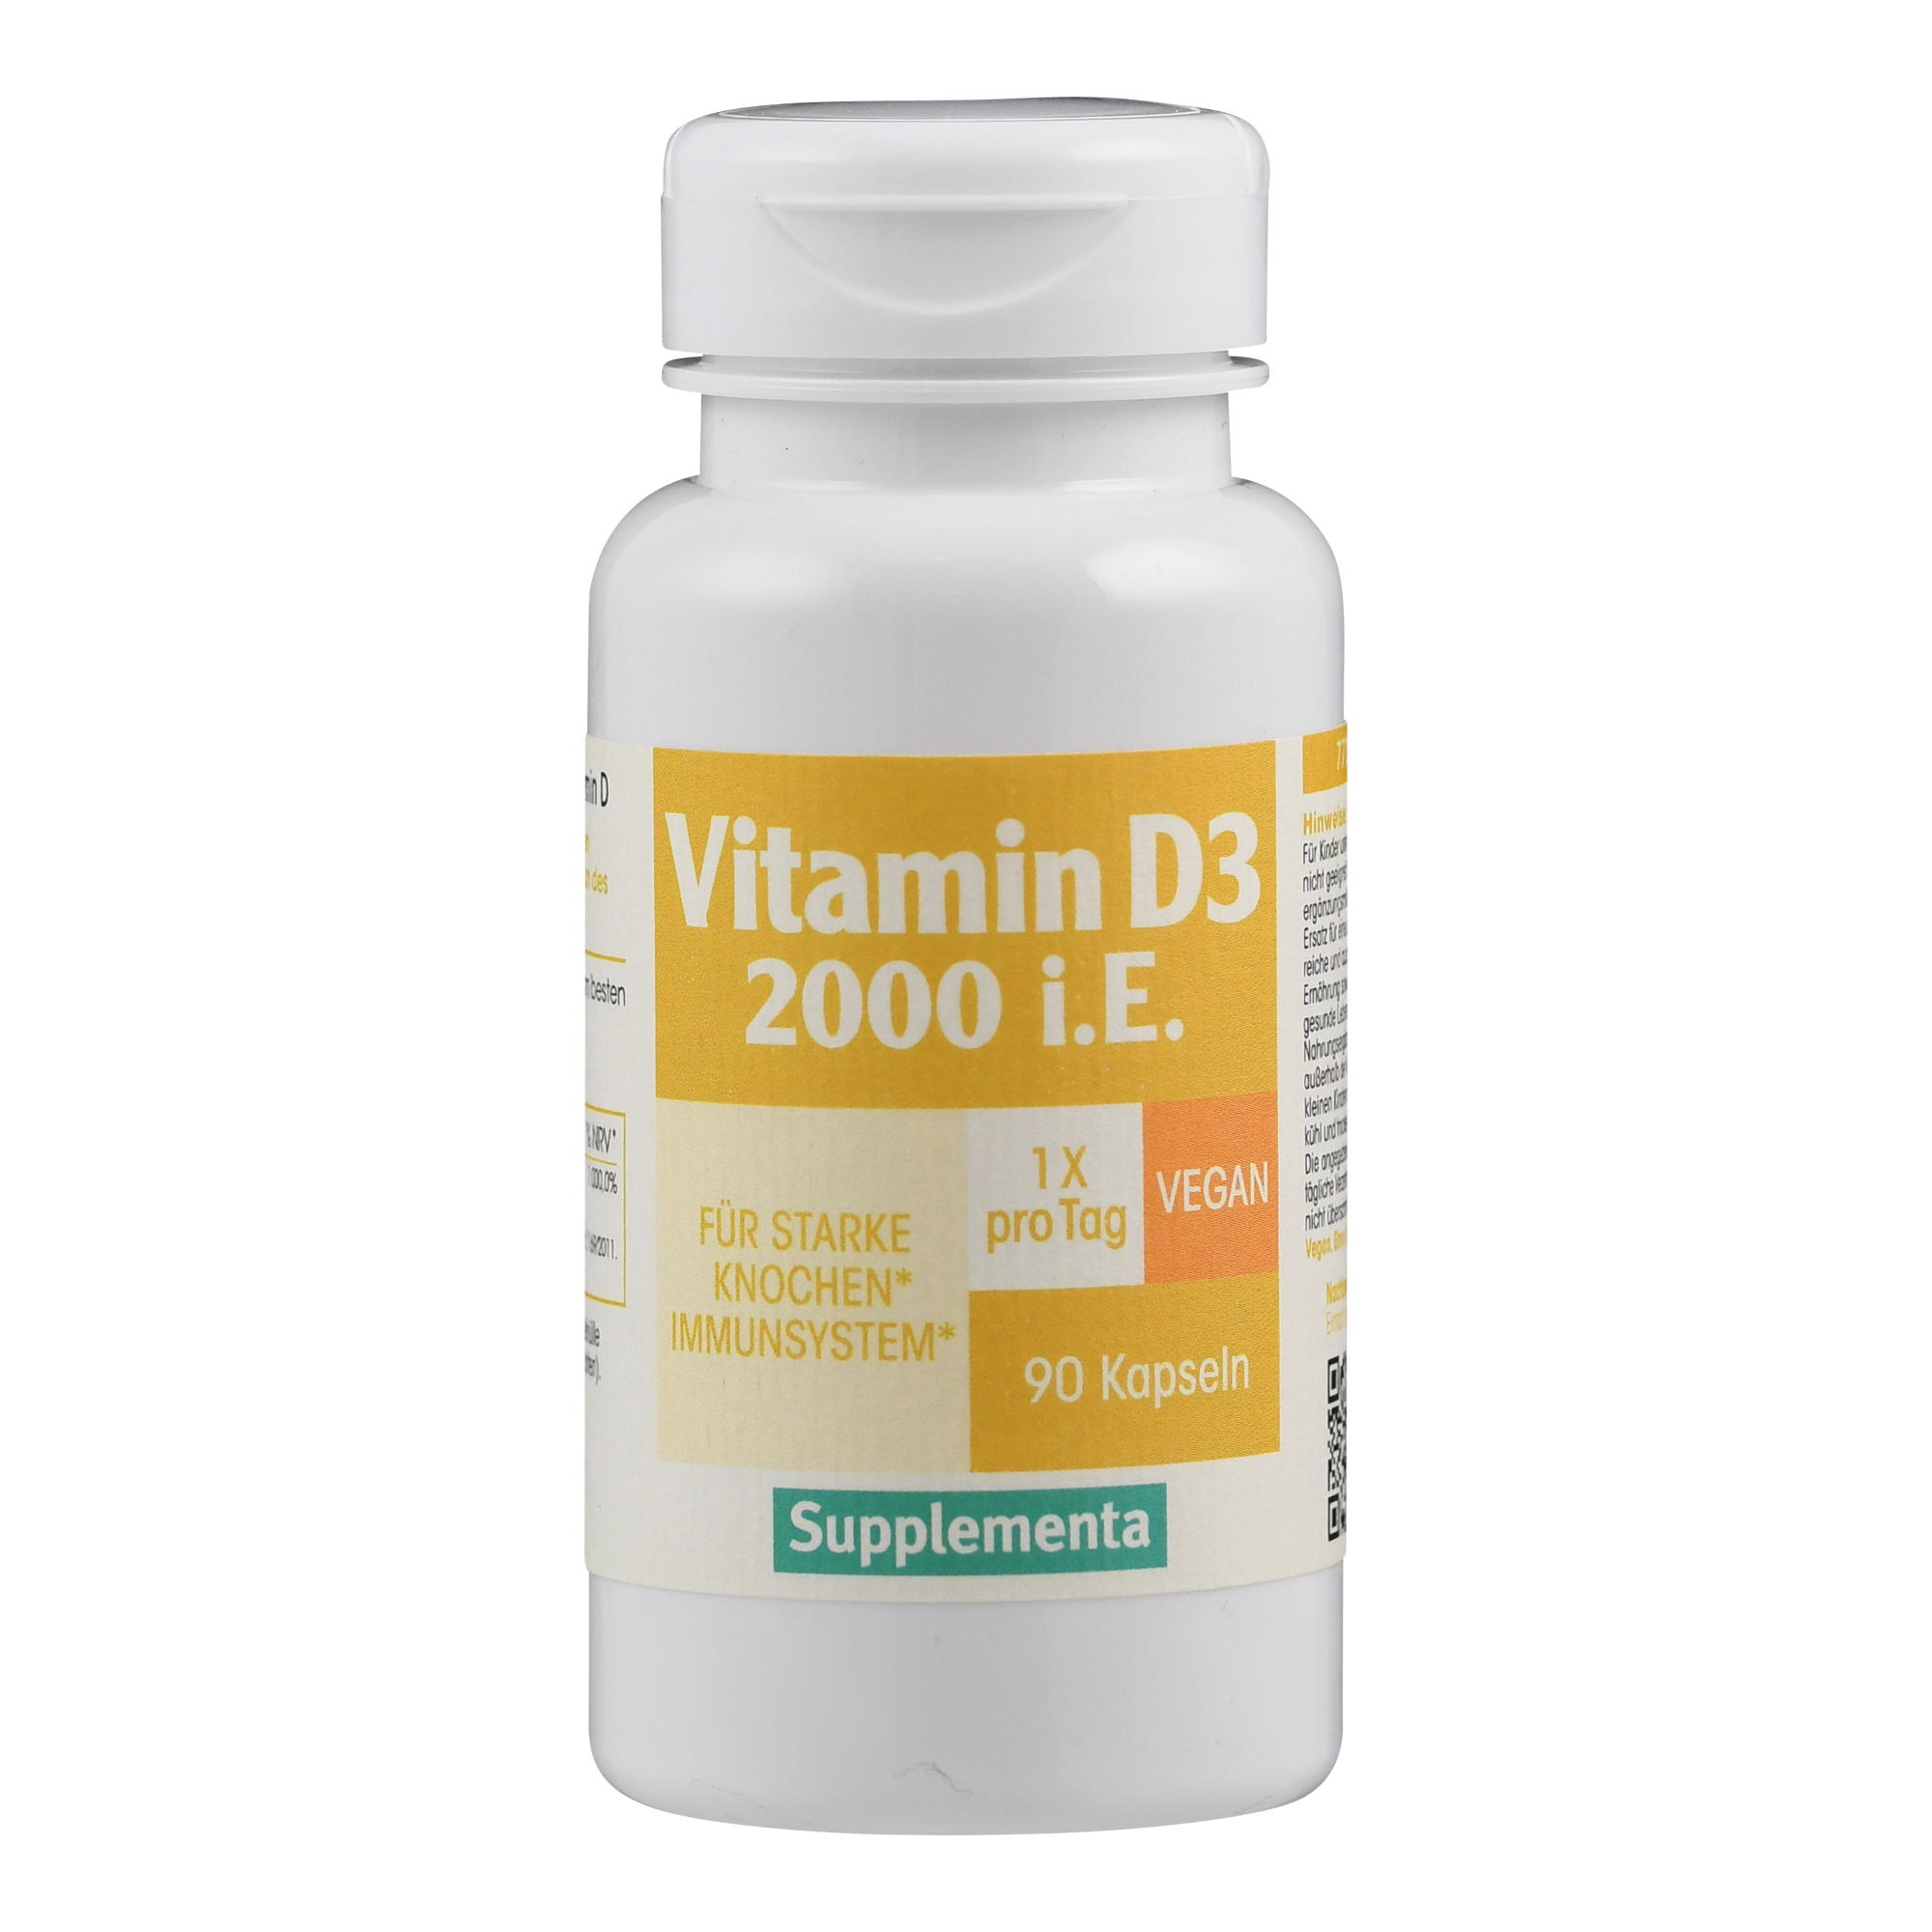 Vitamin D3 2000 i.E. vegan Supplementa von Supplementa.